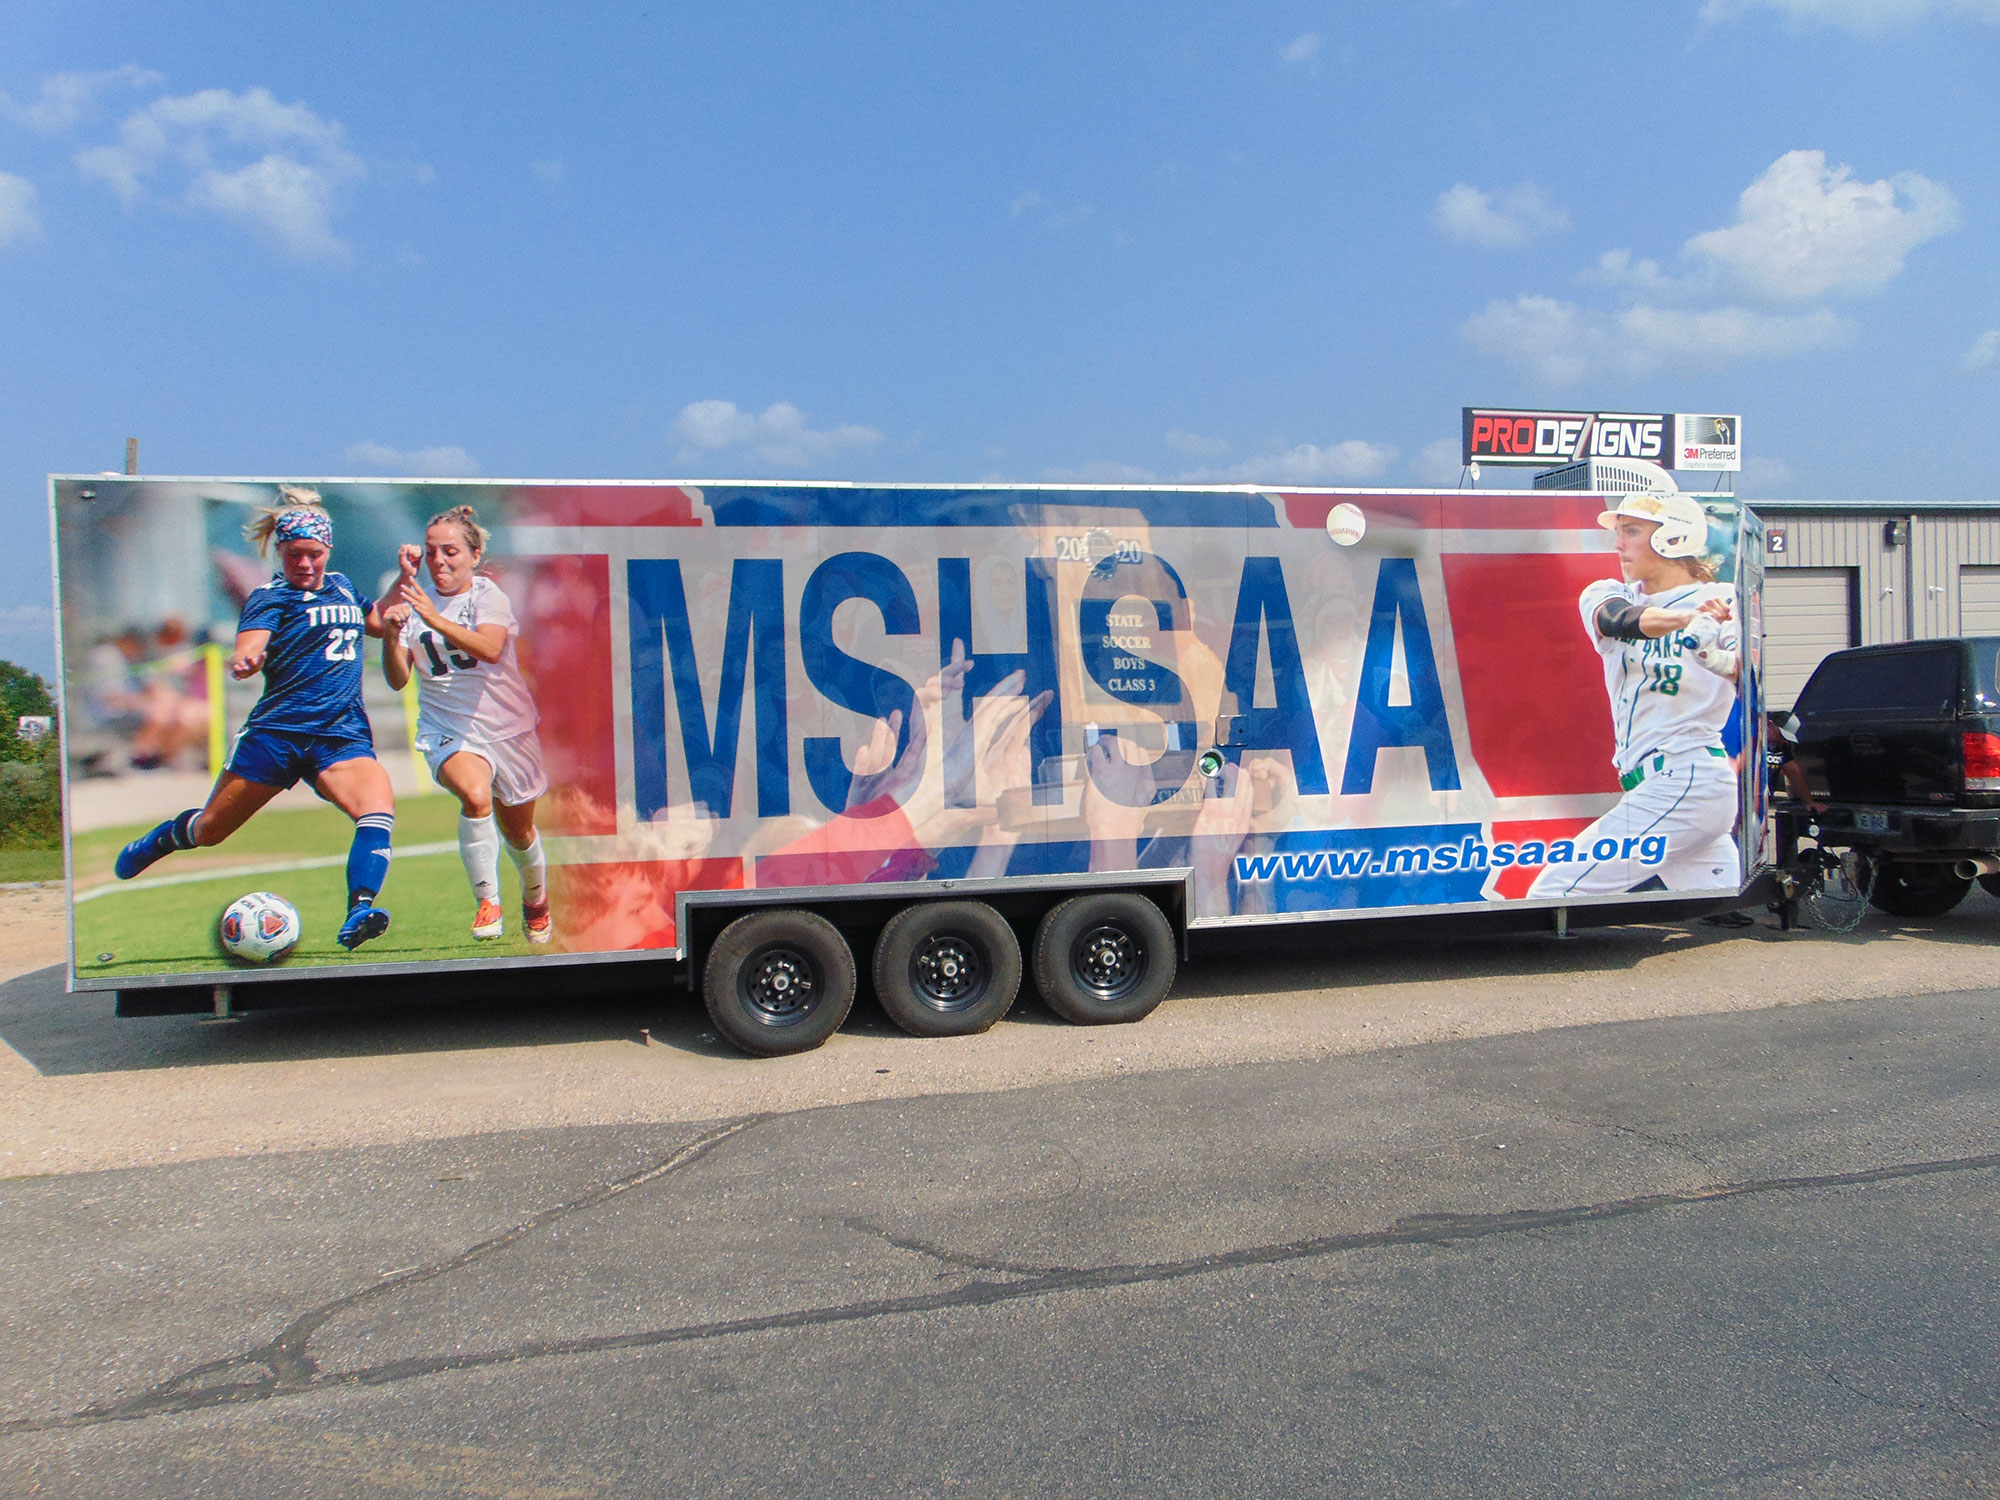 Mshsaa Cargo Trailer Vinyl Wraps Pro Dezigns Columbia Missouri